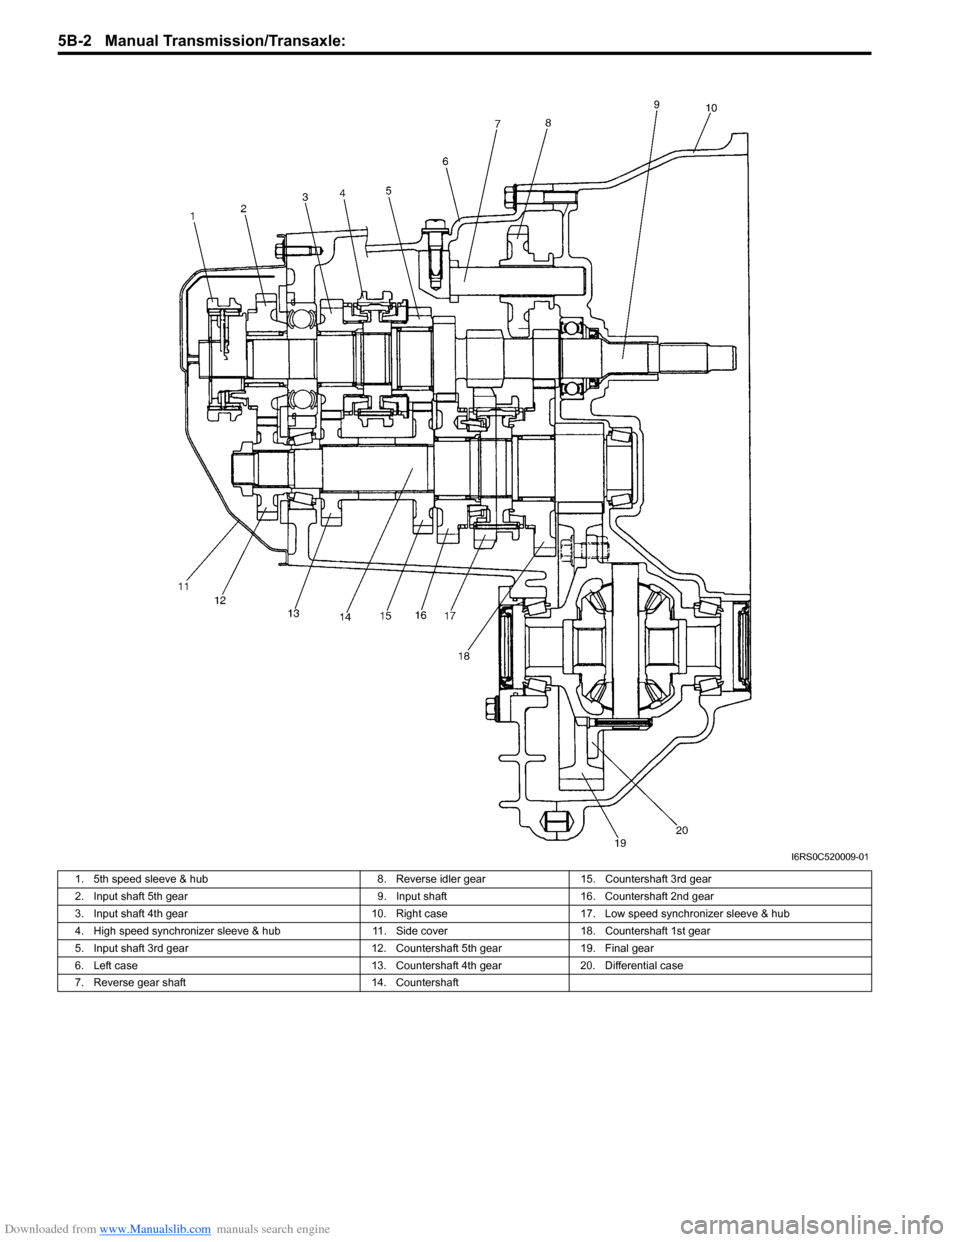 SUZUKI SWIFT 2006 2.G Service Workshop Manual Downloaded from www.Manualslib.com manuals search engine 5B-2 Manual Transmission/Transaxle: 
I6RS0C520009-01
1. 5th speed sleeve & hub8. Reverse idler gear15. Countershaft 3rd gear
2. Input shaft 5th